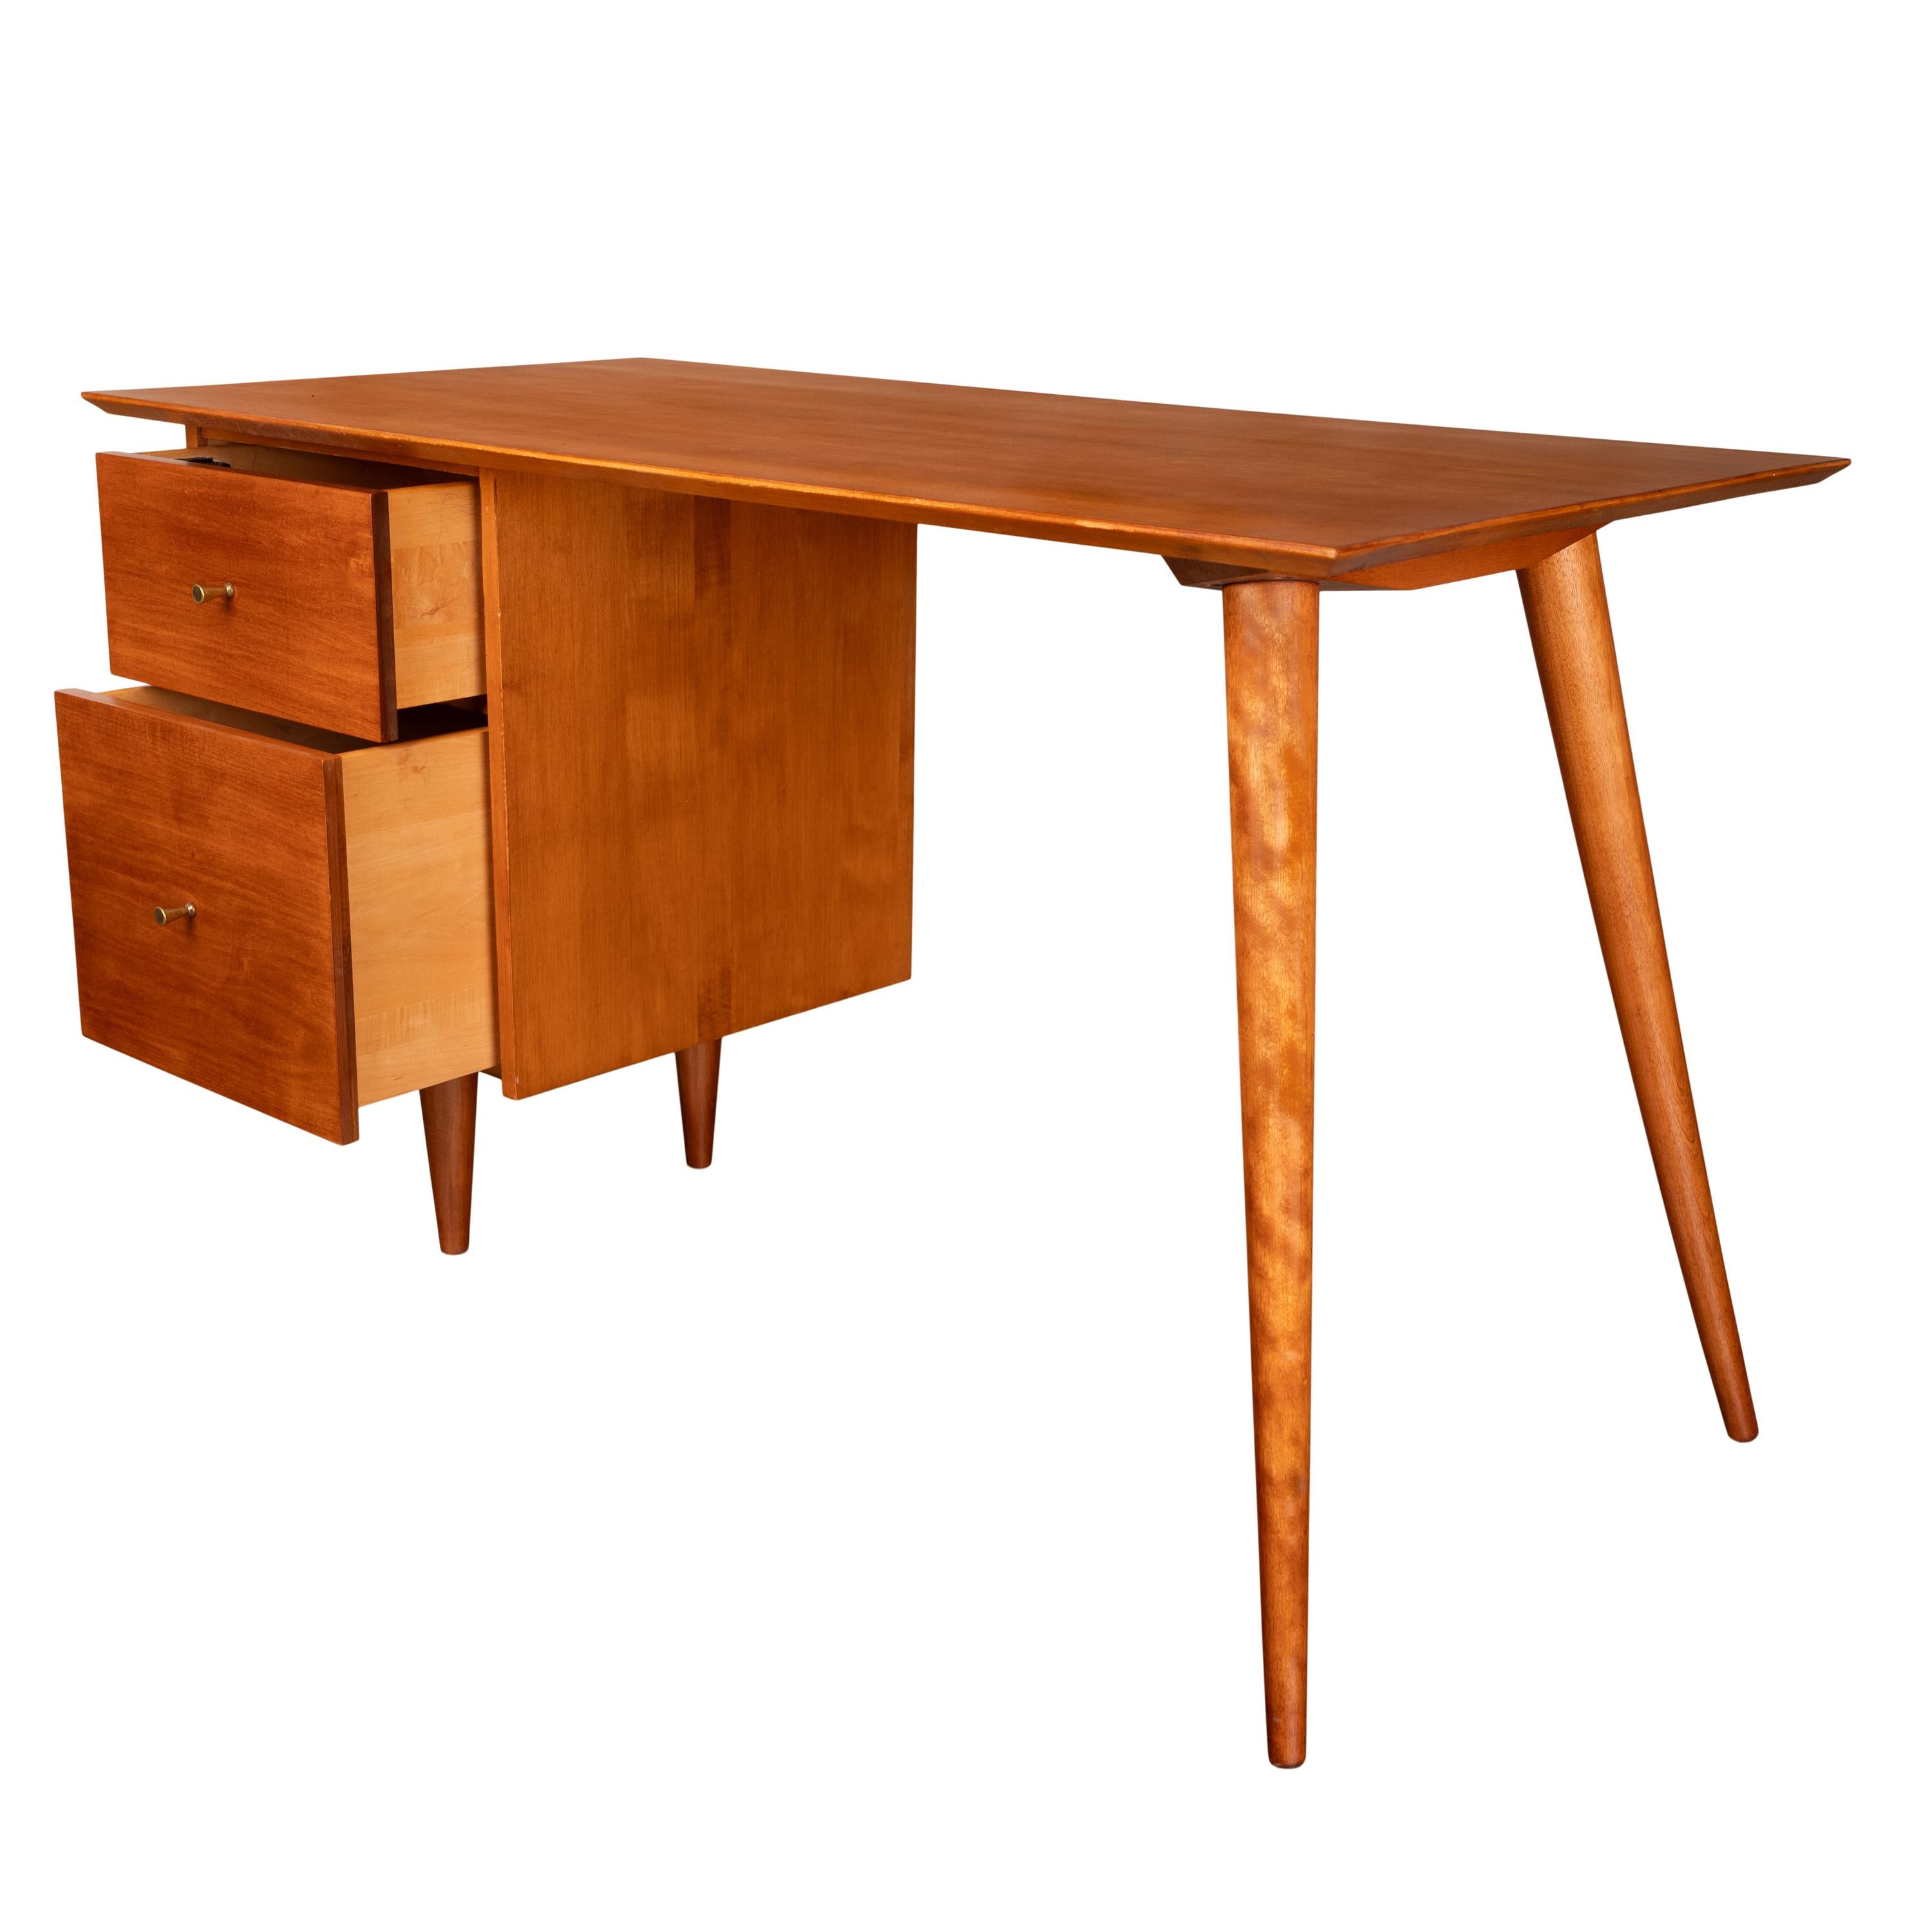 Mid-20th Century American Mid Century Modern Paul McCobb Planner Group Maple # 1560 Desk 1950's